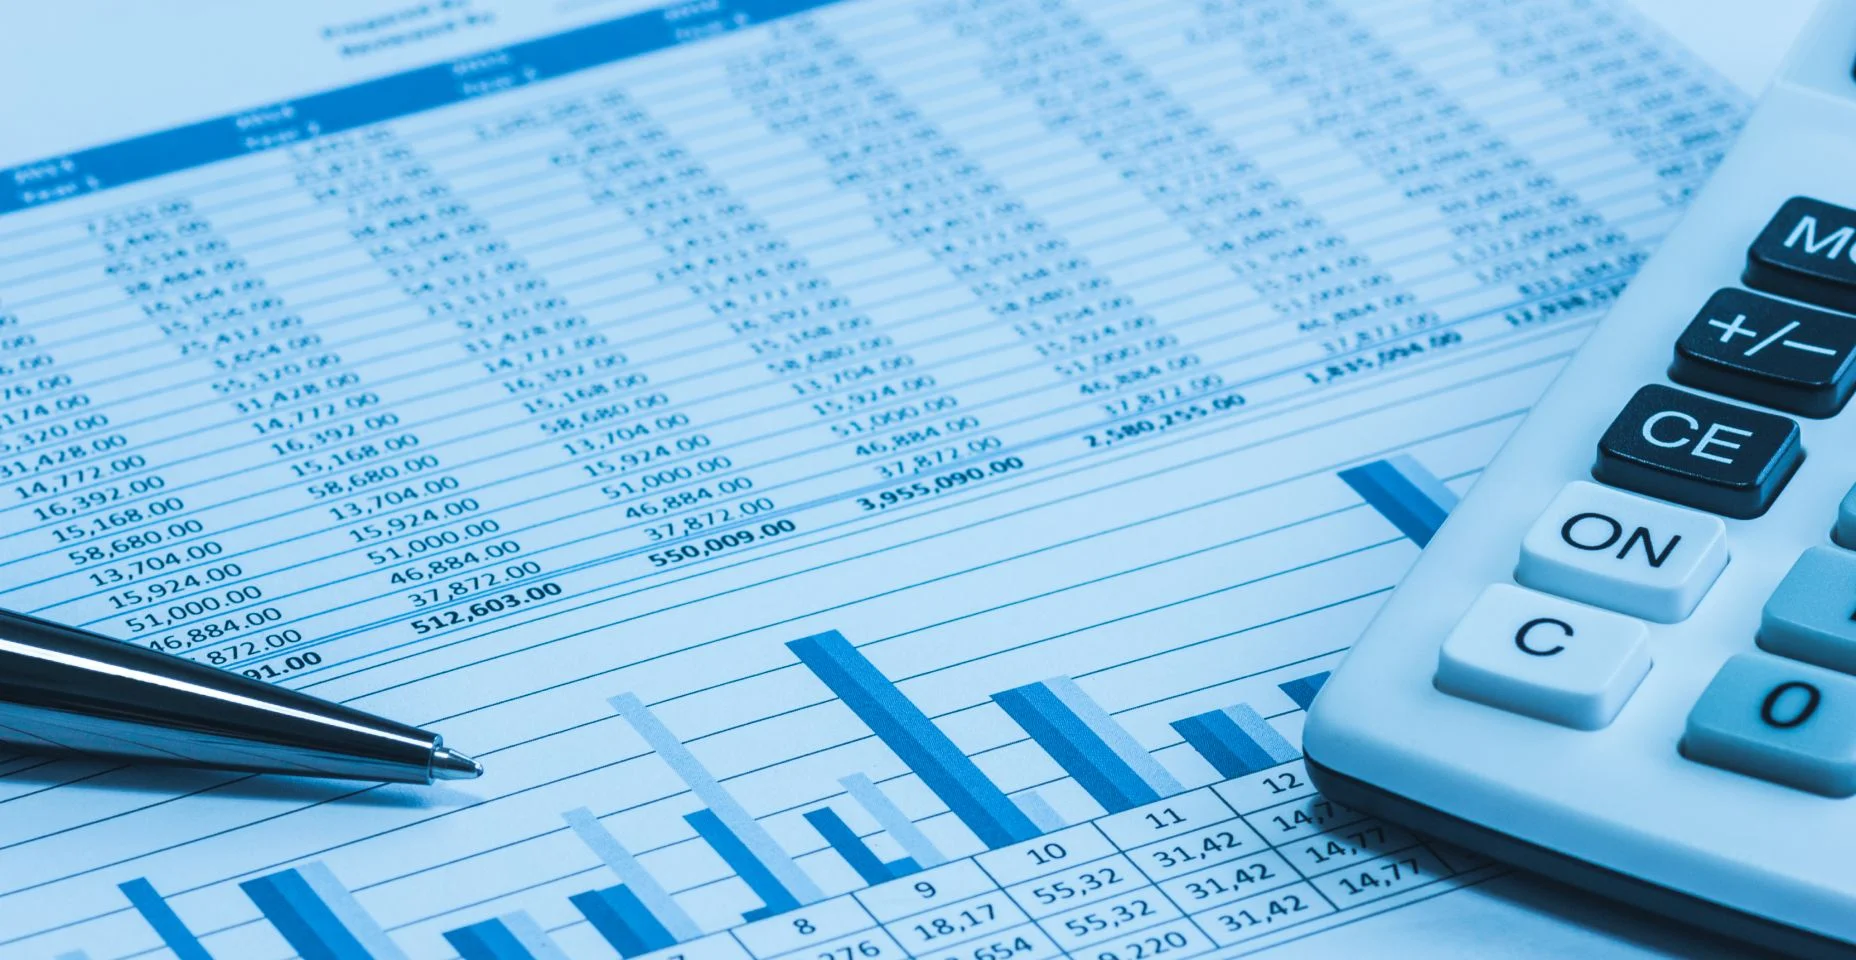 Contador de contabilidade documentos financeiros análise de gráficos